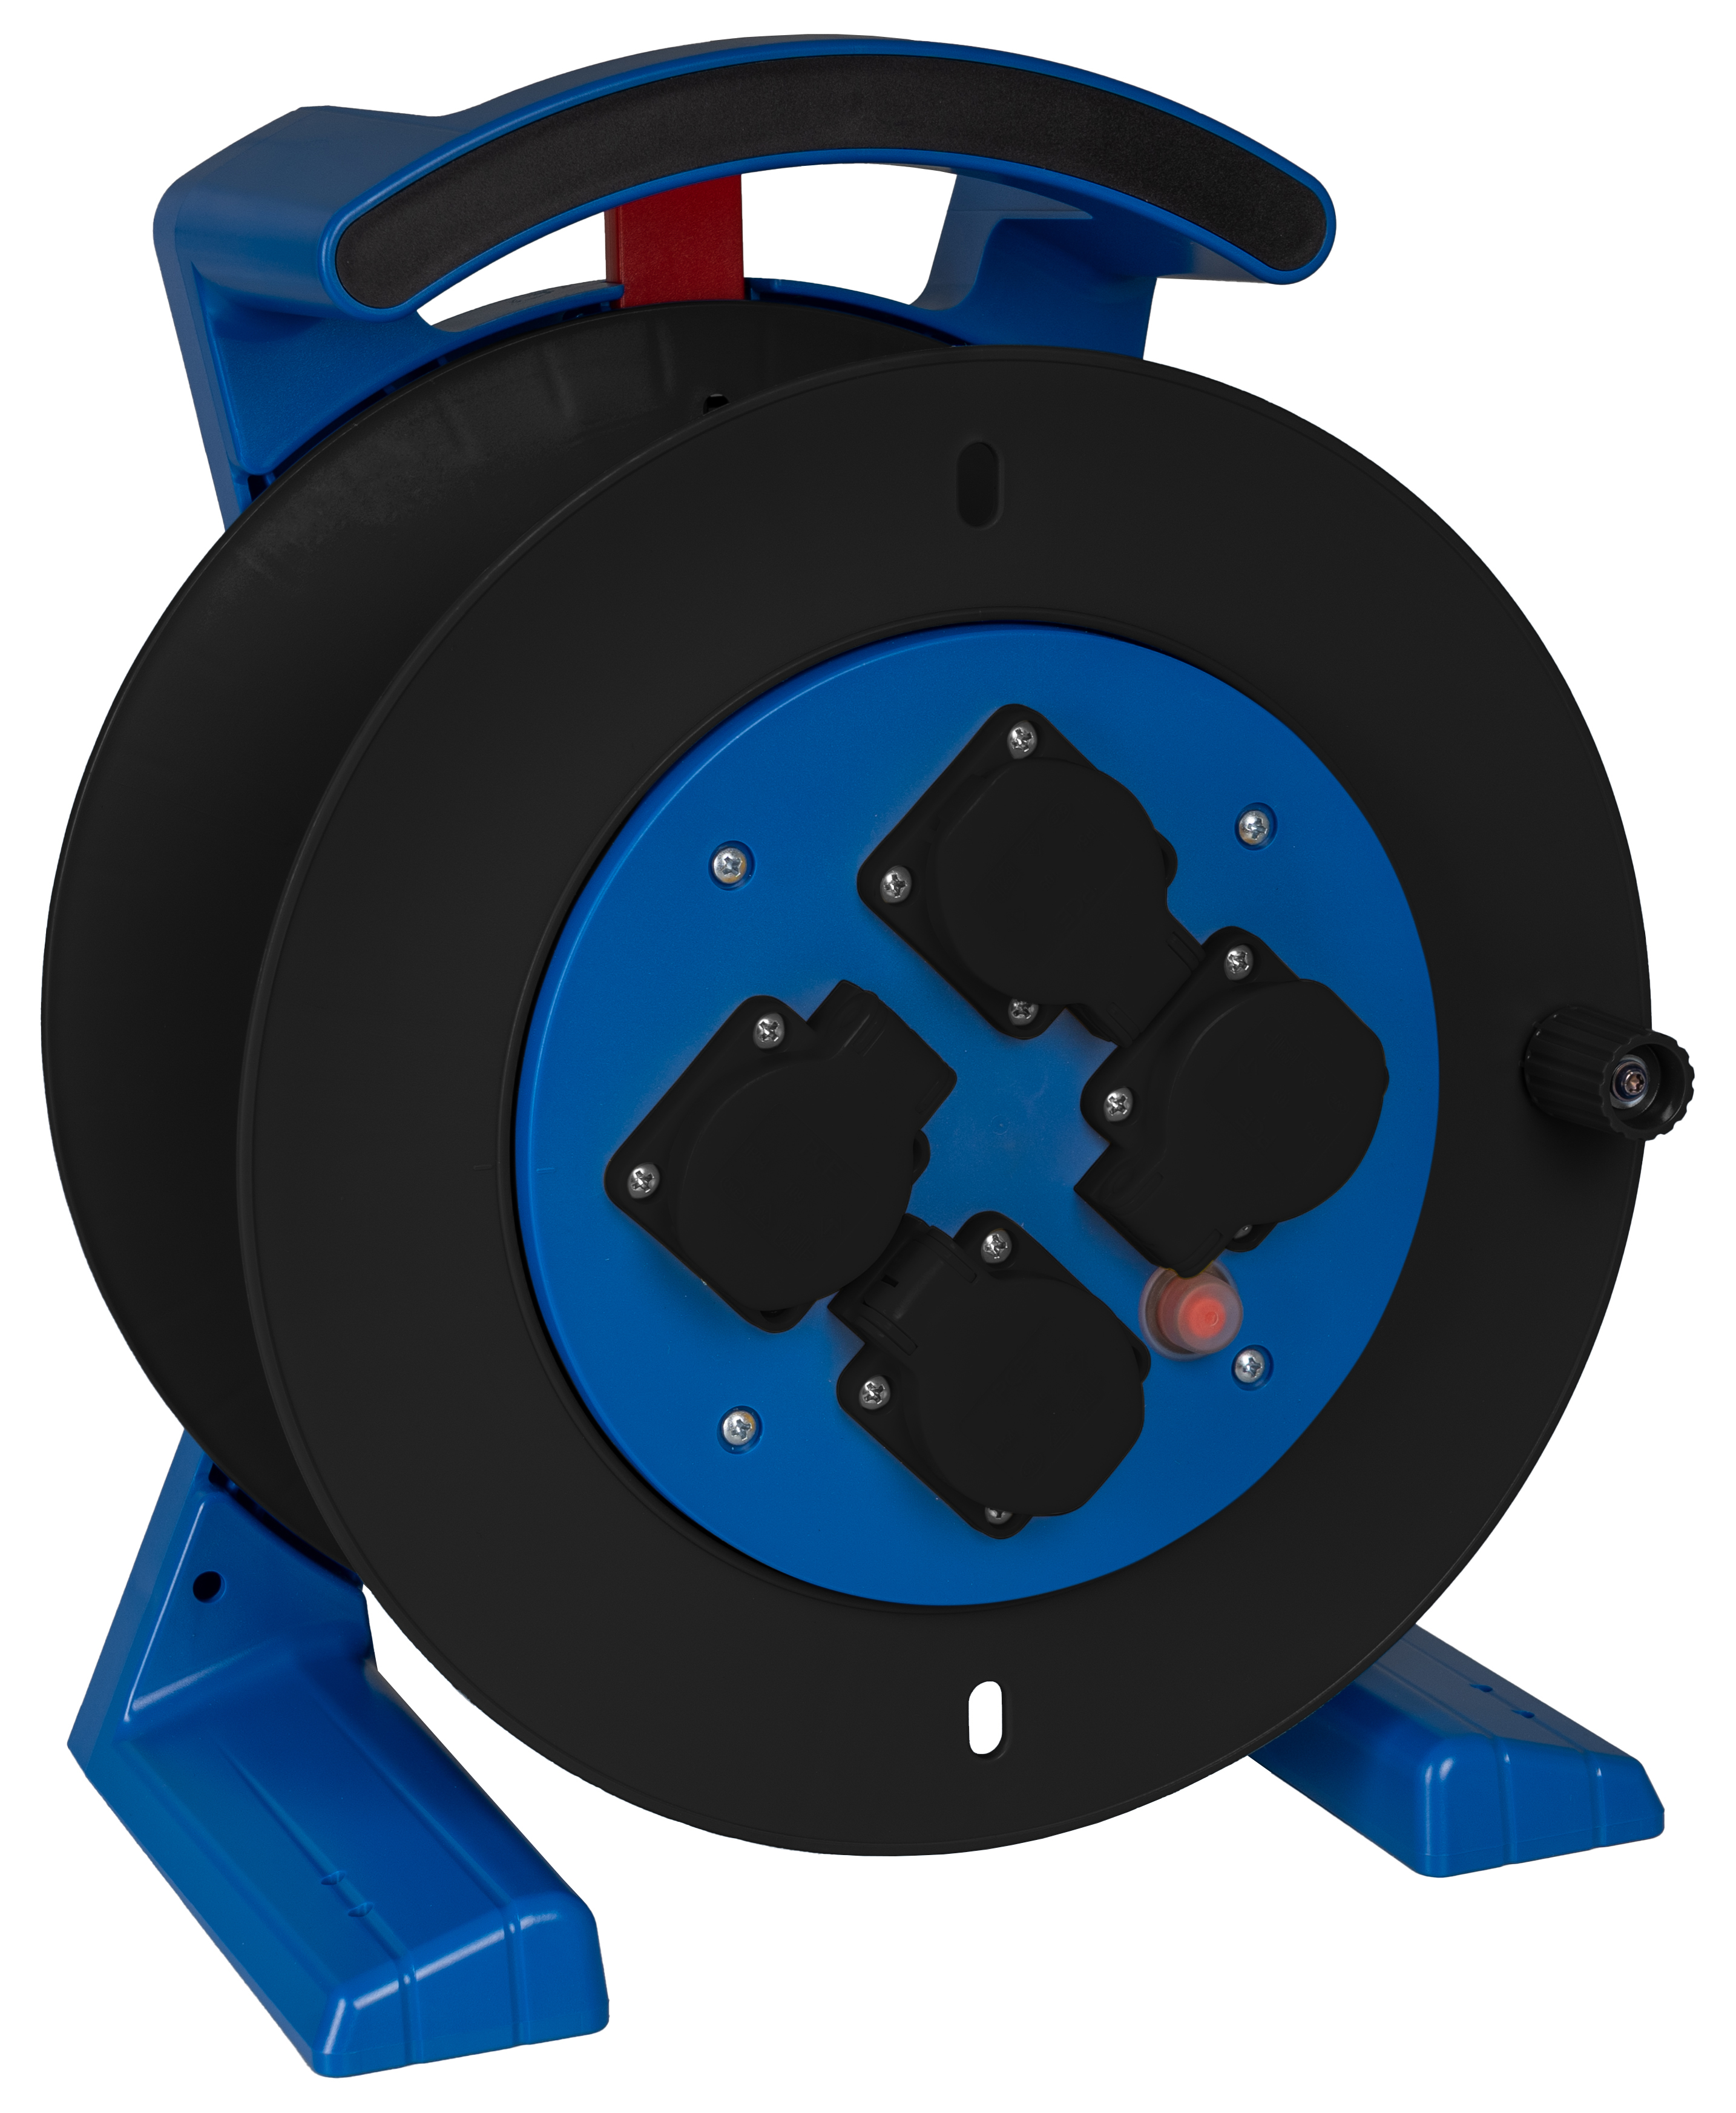 JUMBO kabelhaspel 2.0, lege trommel in blauw-zwart, 4 schokbestendige contactdozen